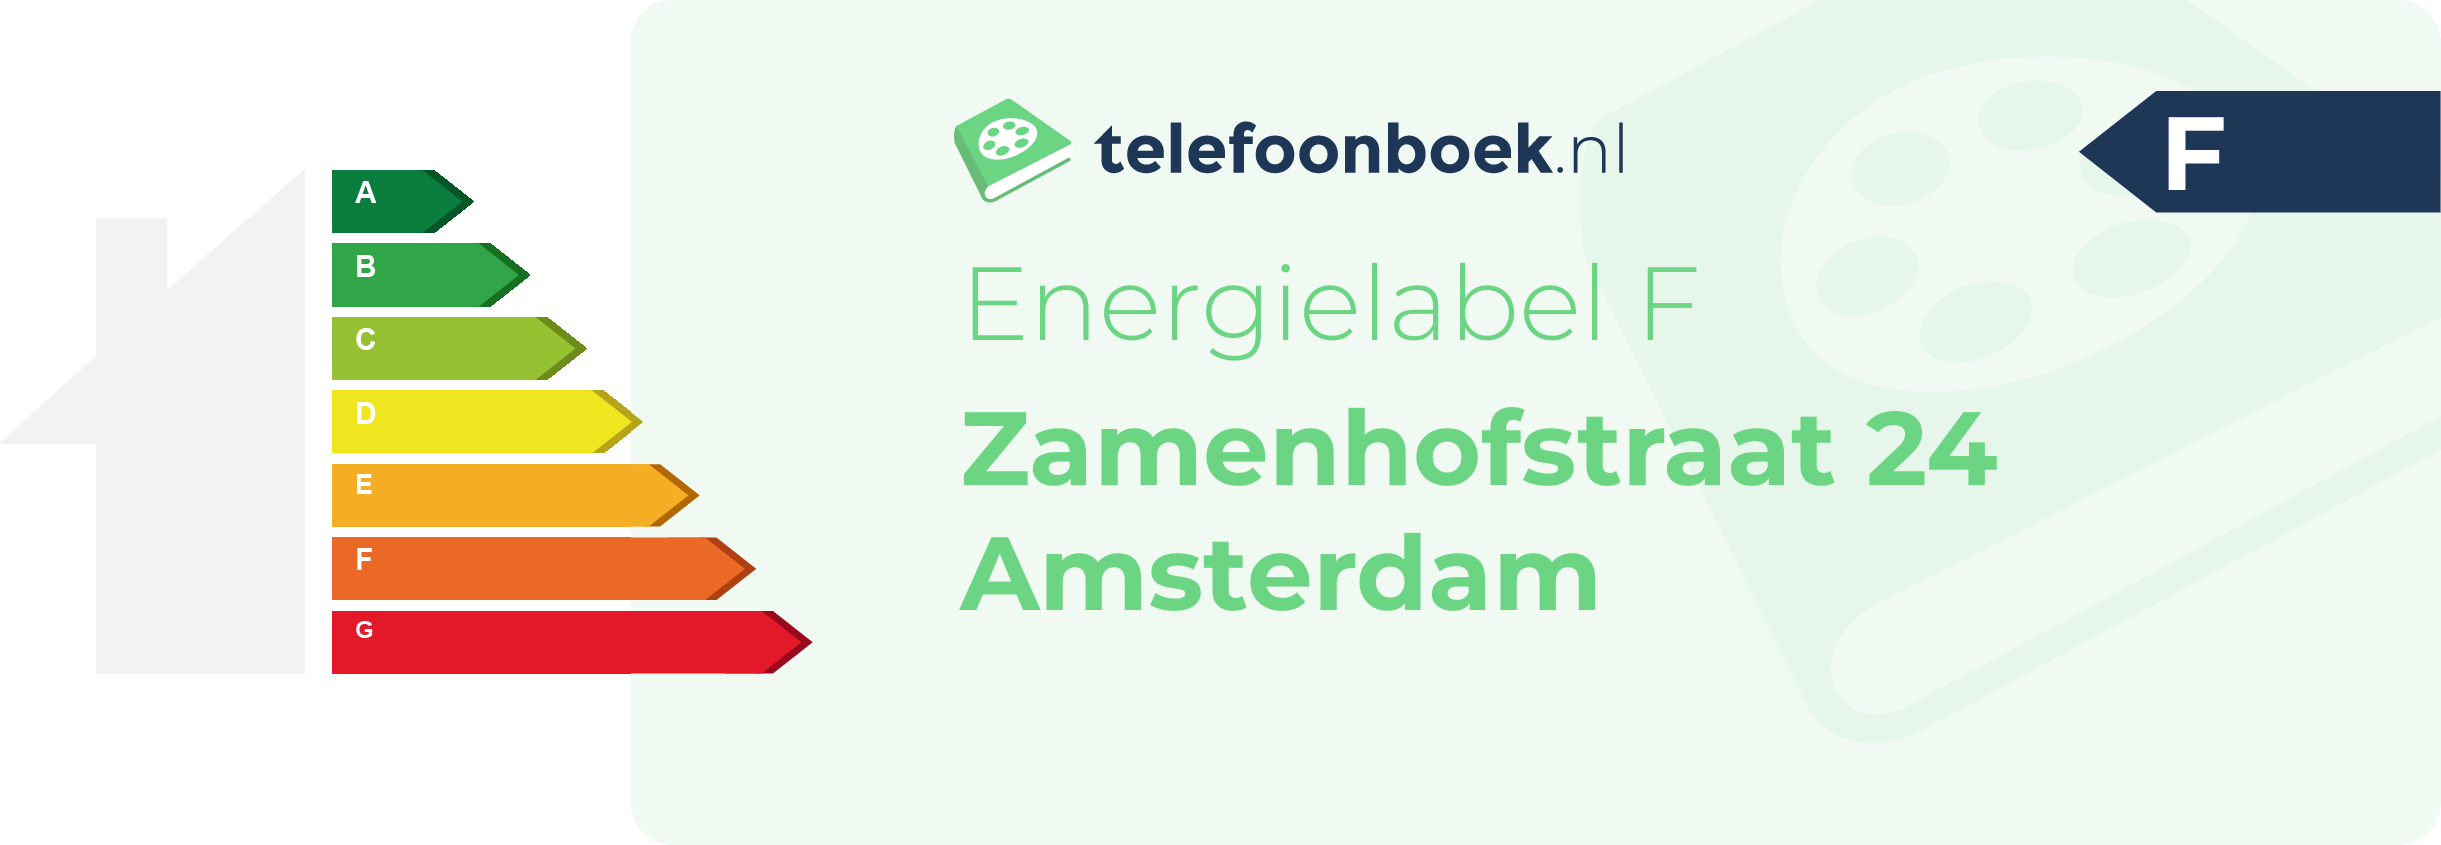 Energielabel Zamenhofstraat 24 Amsterdam